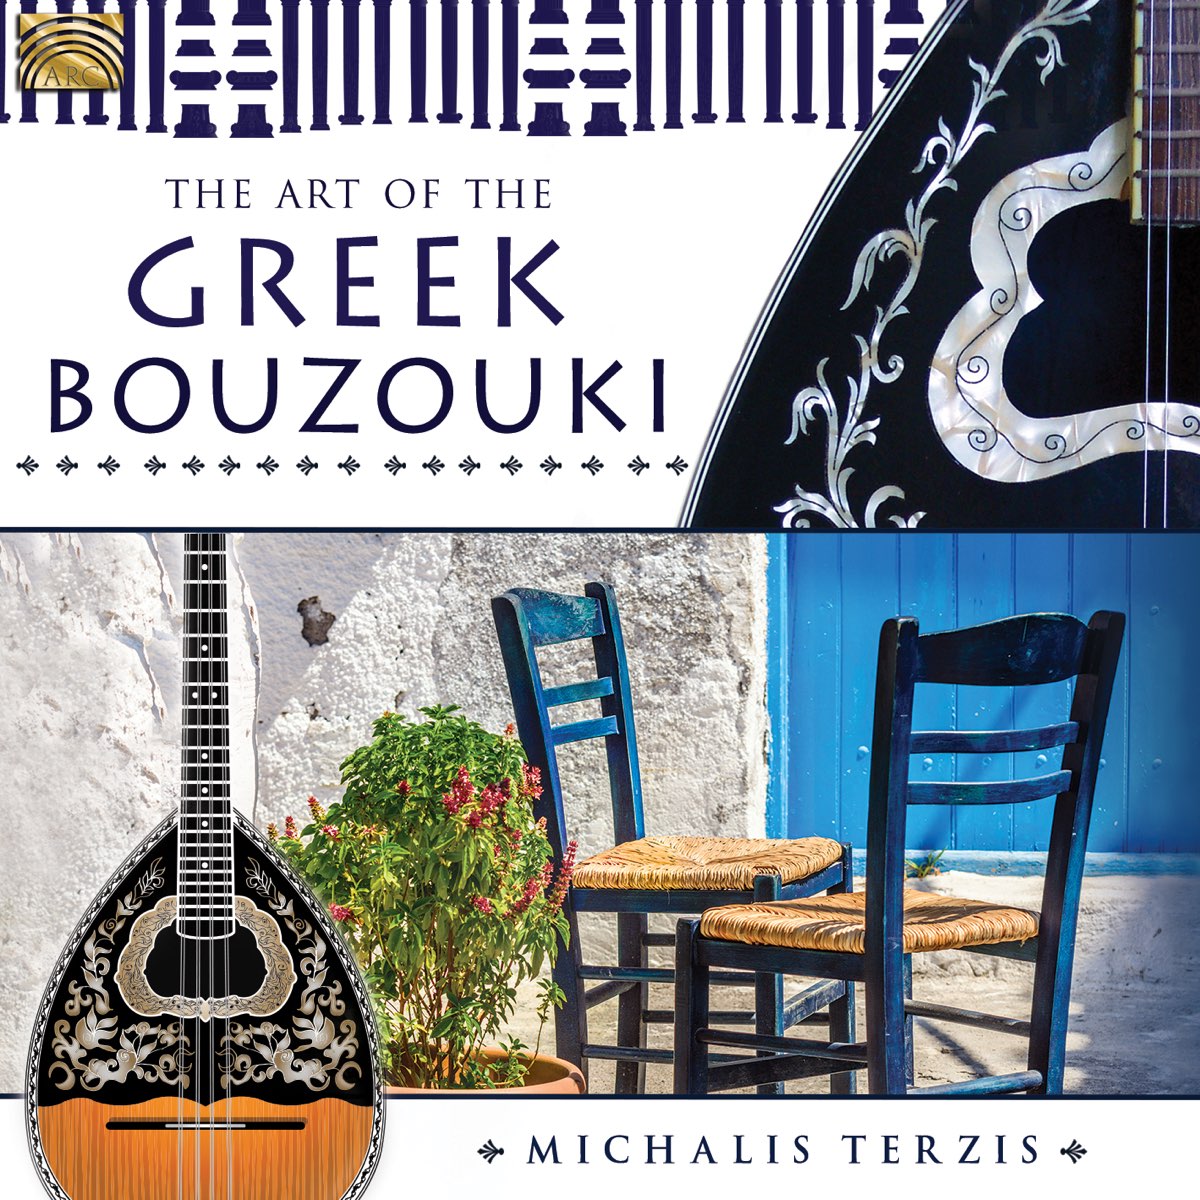 The Art of the Greek Bouzouki - Album by Michalis Terzis - Apple Music